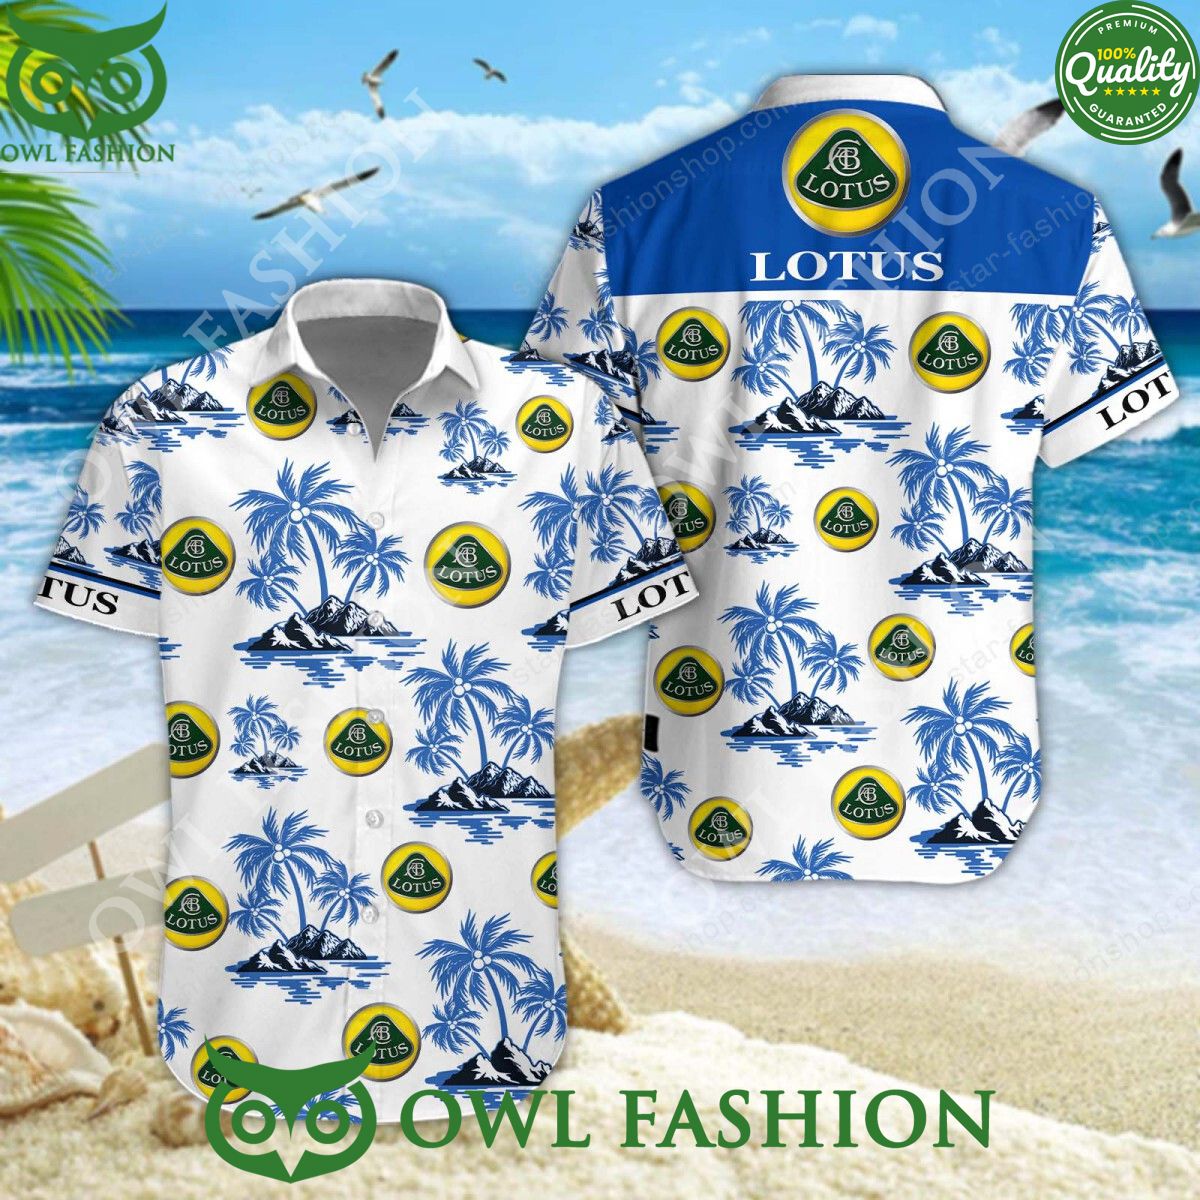 lotus luxury car manufacturer limited hawaiian shirt shorts 1